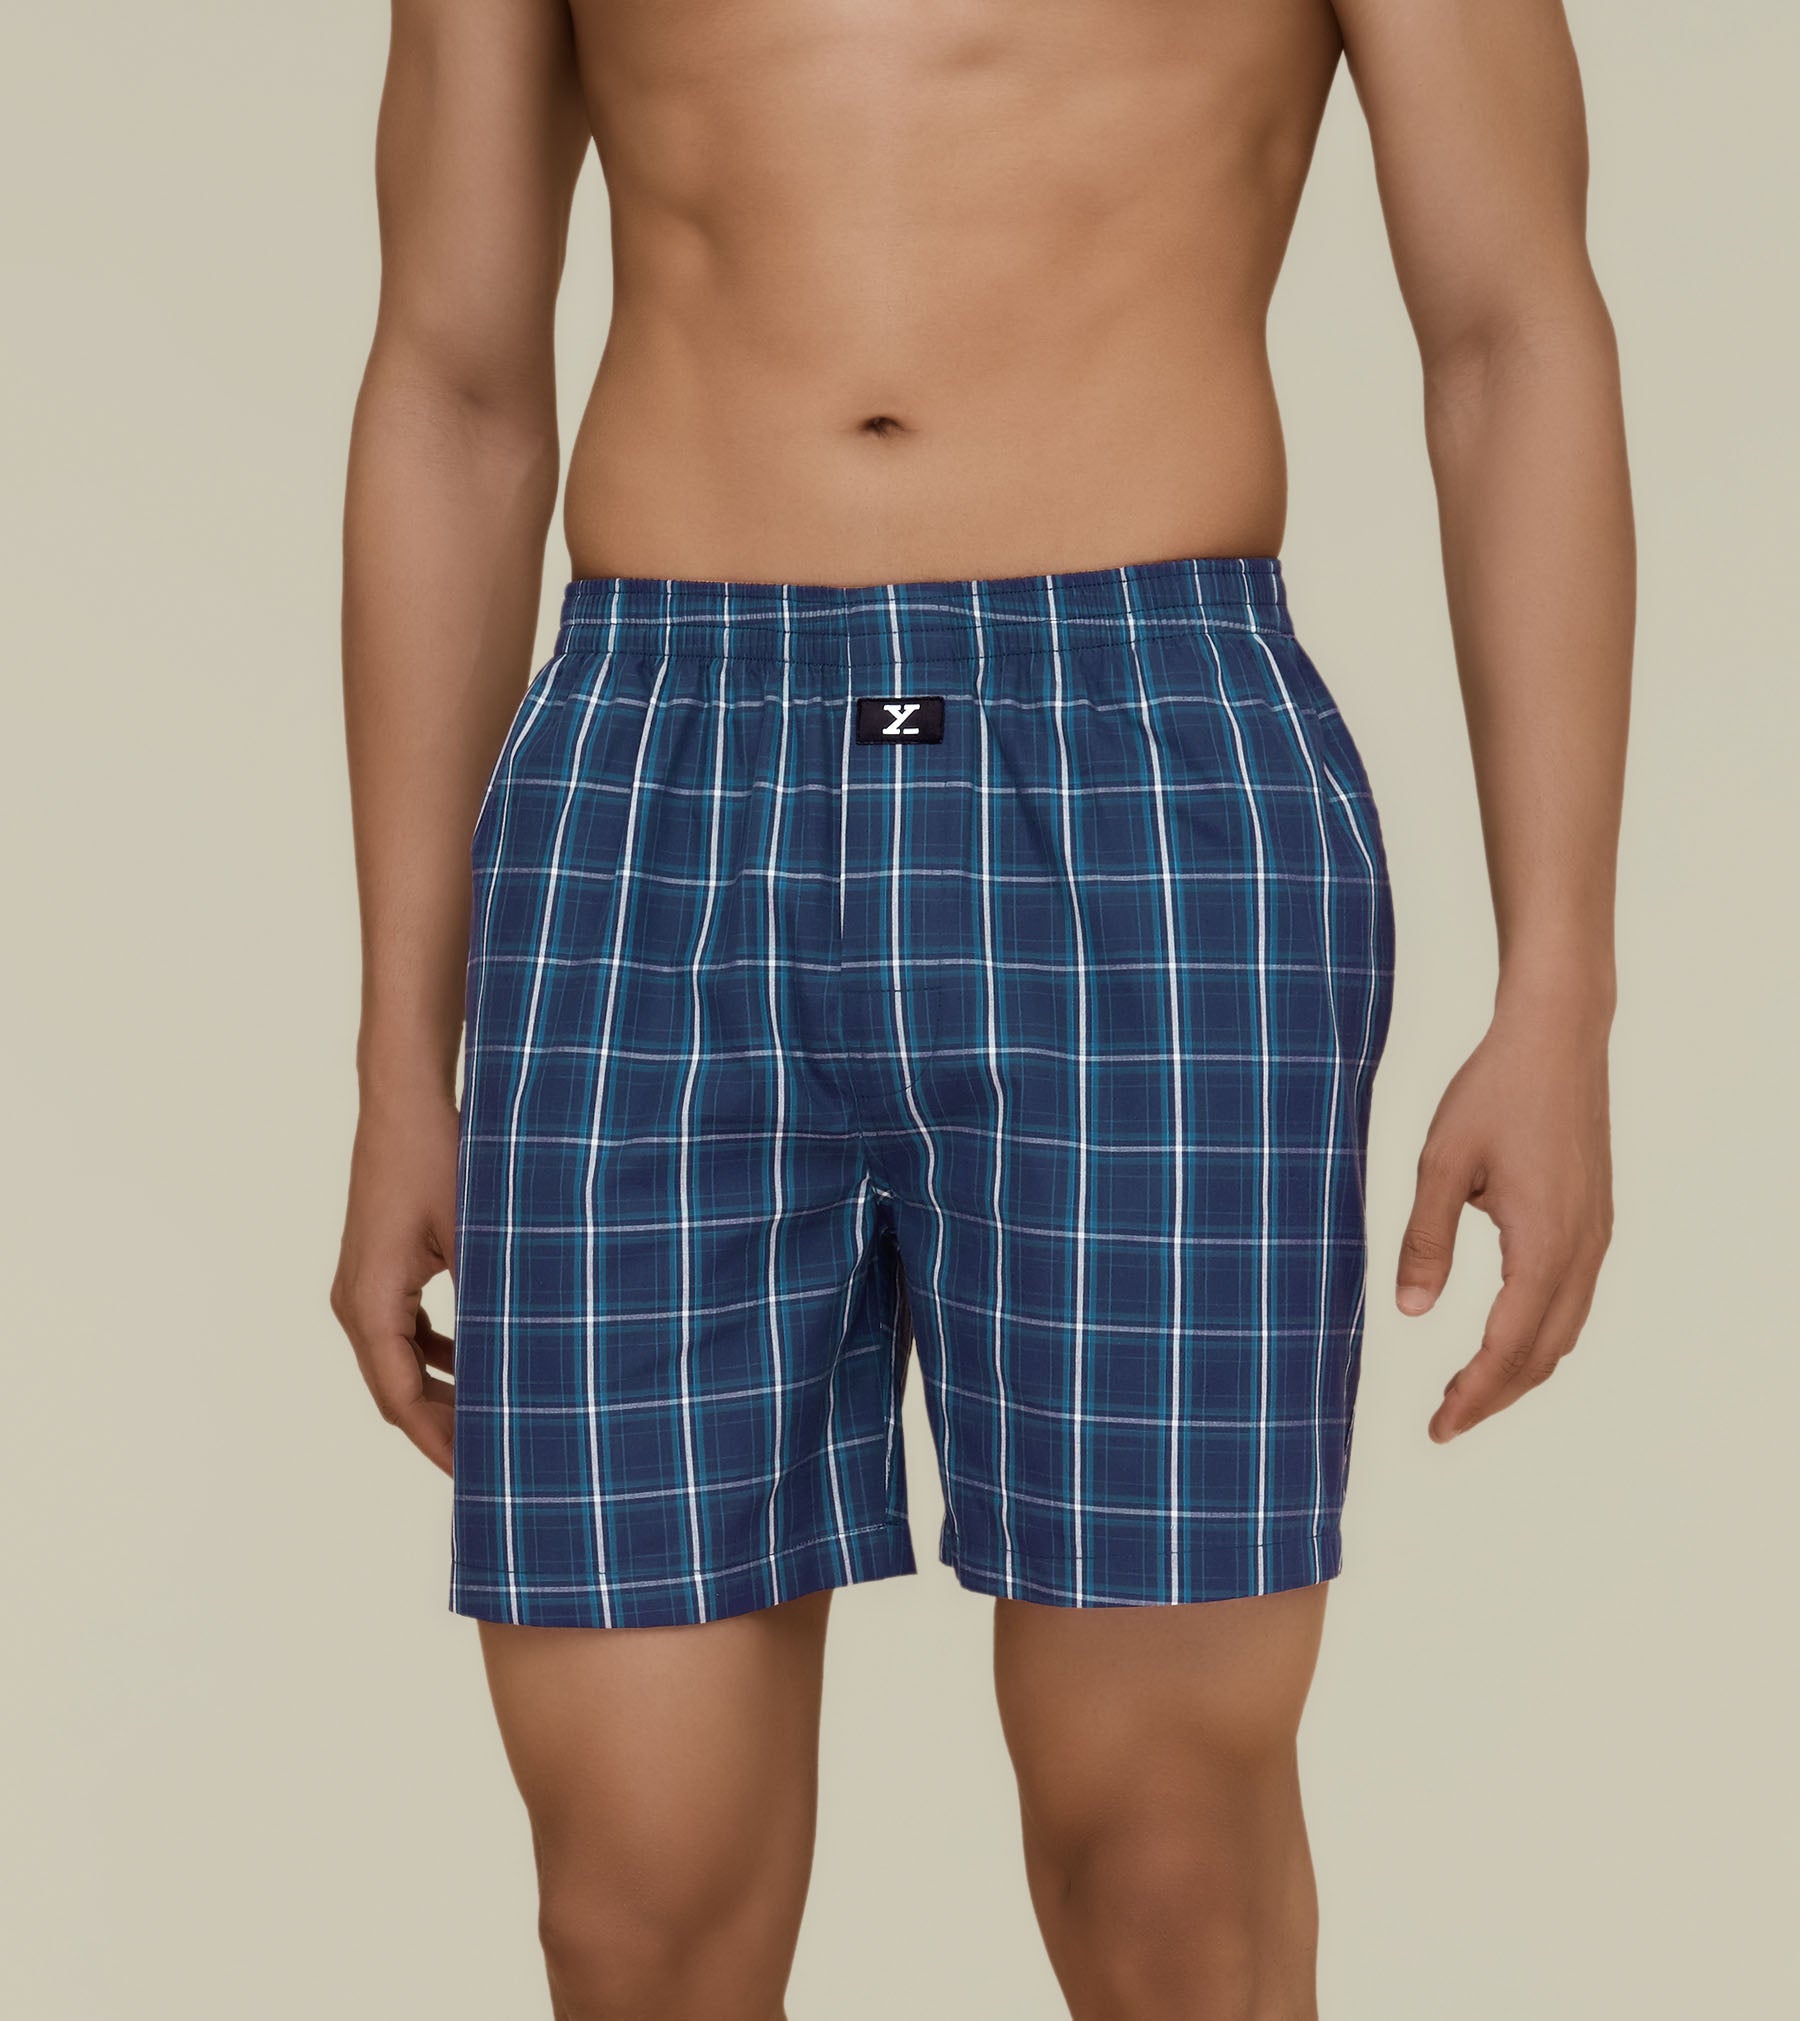 Checkmate Combed Cotton Boxer Shorts For Men Vivid Blue - XYXX Mens Apparels